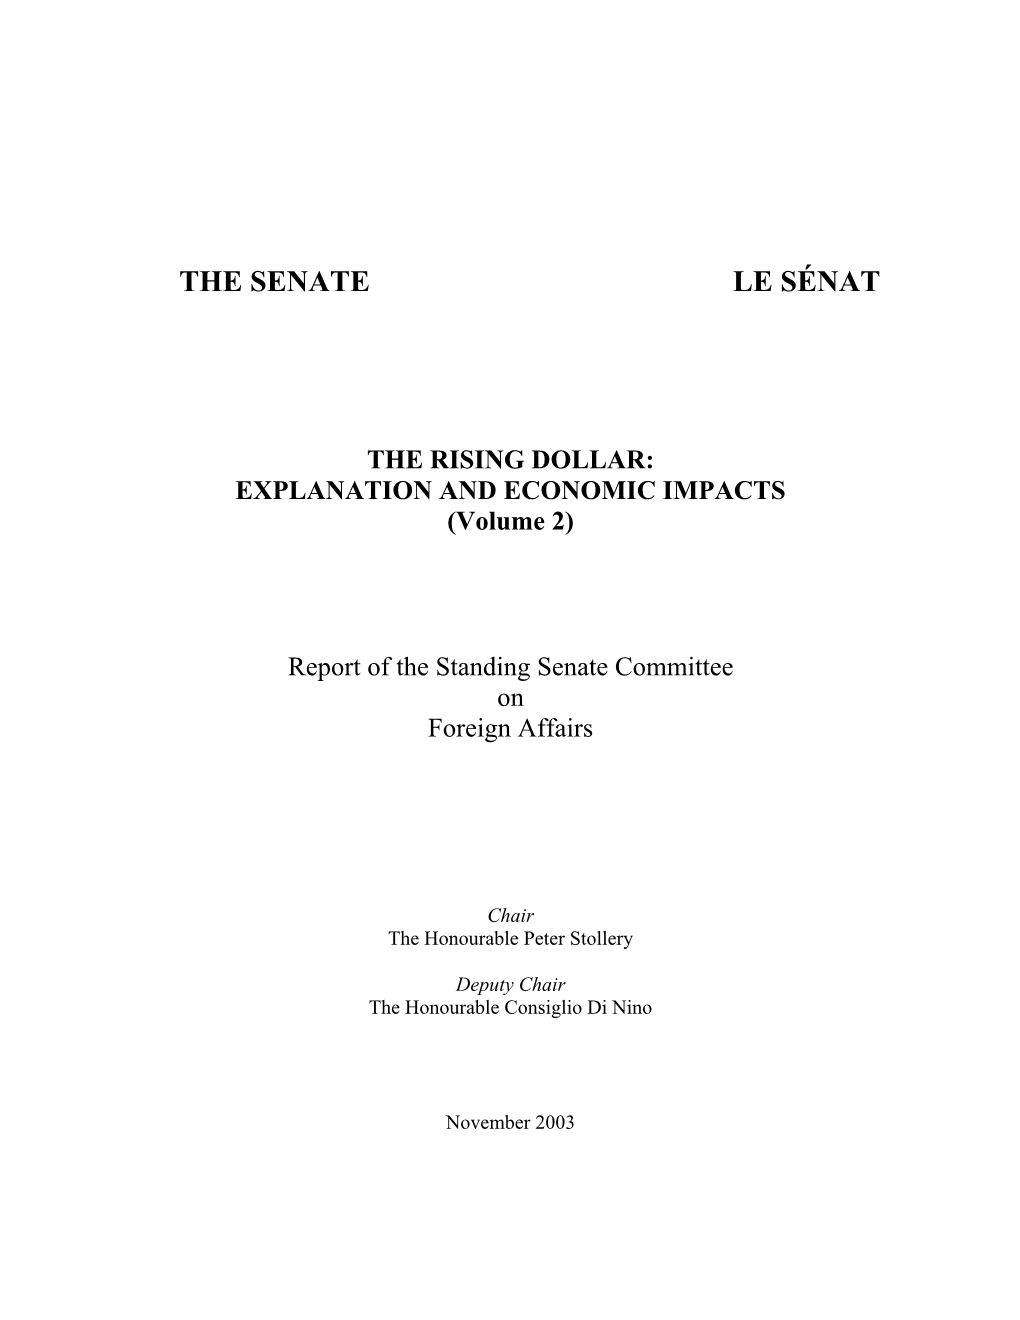 The Senate Le Sénat the Rising Dollar: Explanation and Economic Impacts